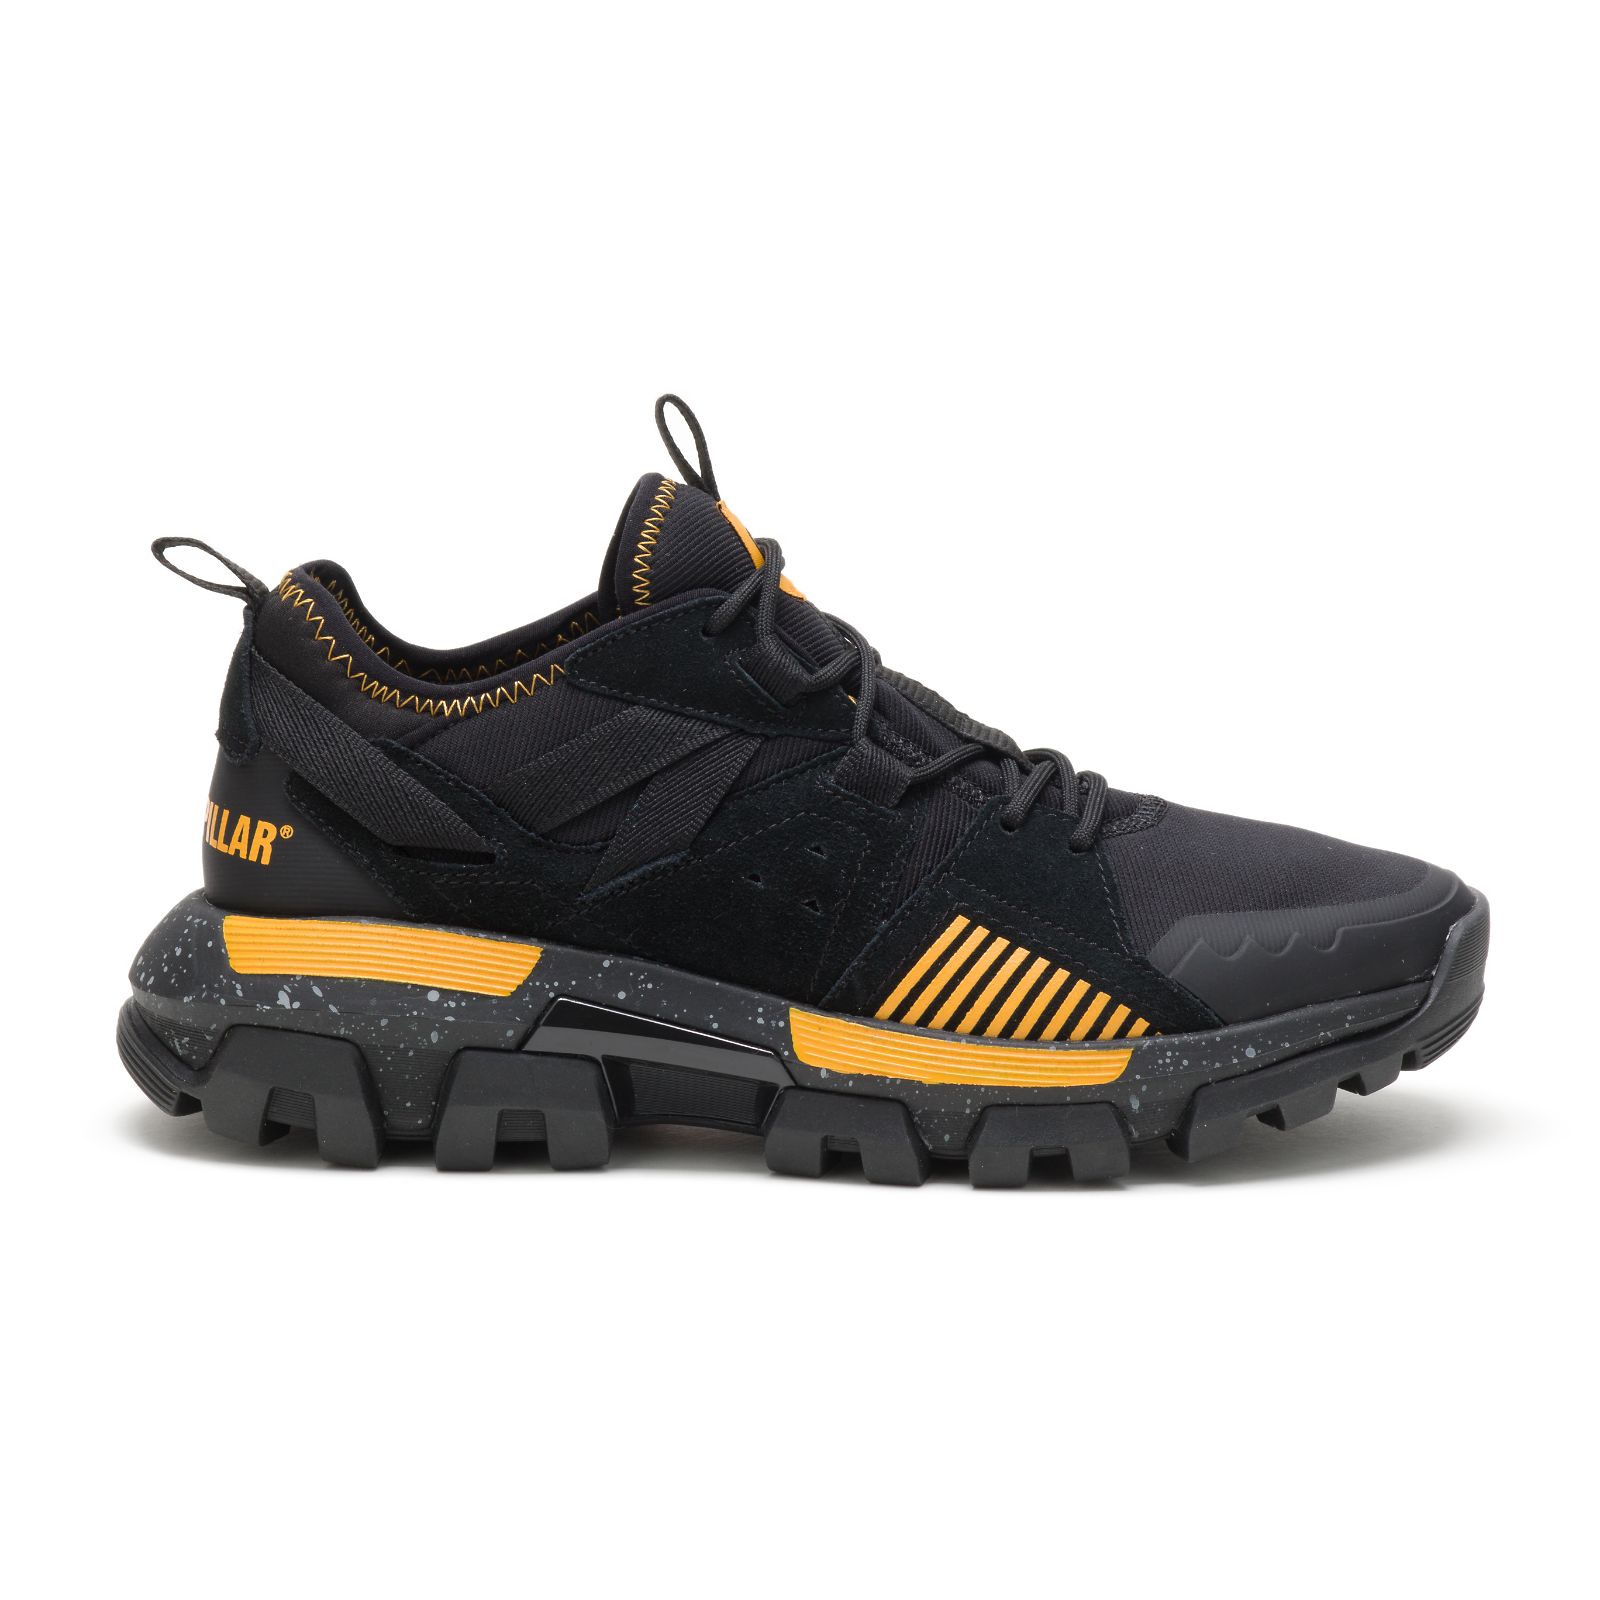 Caterpillar Shoes Sale - Caterpillar Raider Sport Mens Sneakers Black/Yellow (378649-VHE)